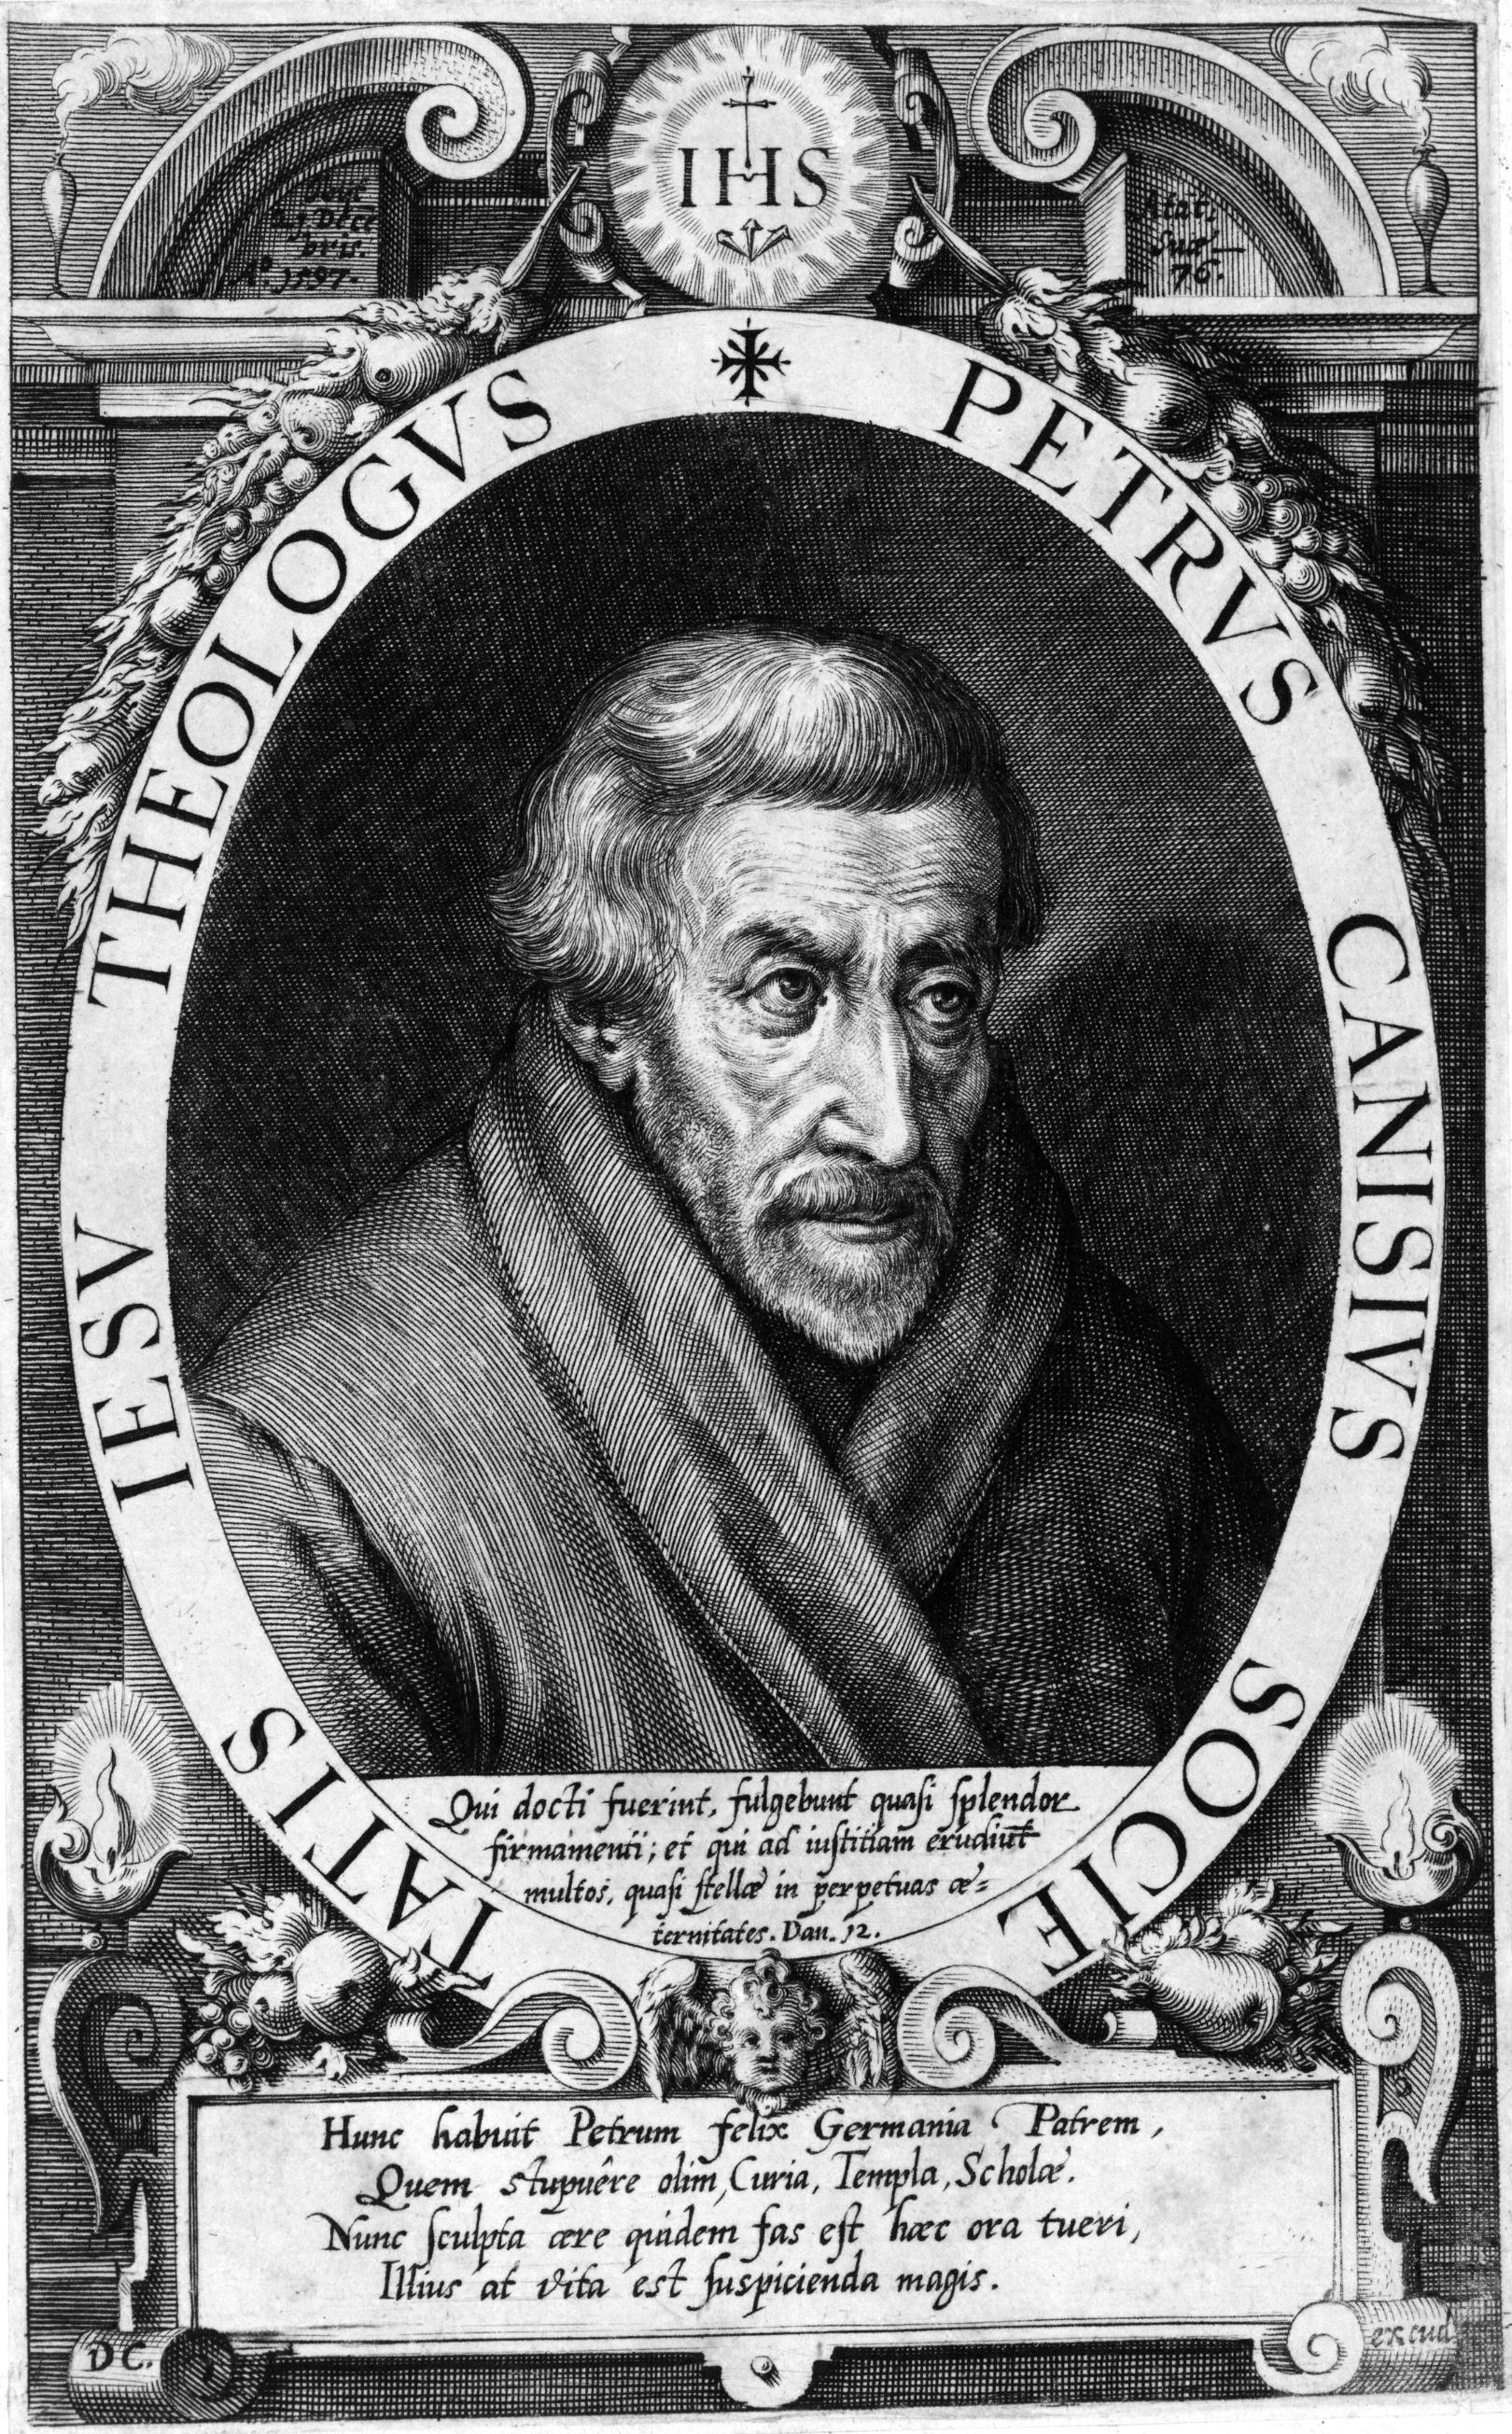 Petrus Kanisius (c) Von Dominicus Custos - http://www.portraitindex.de/documents/obj/34701241, Gemeinfrei, https://commons.wikimedia.org/w/index.php?curid=96111